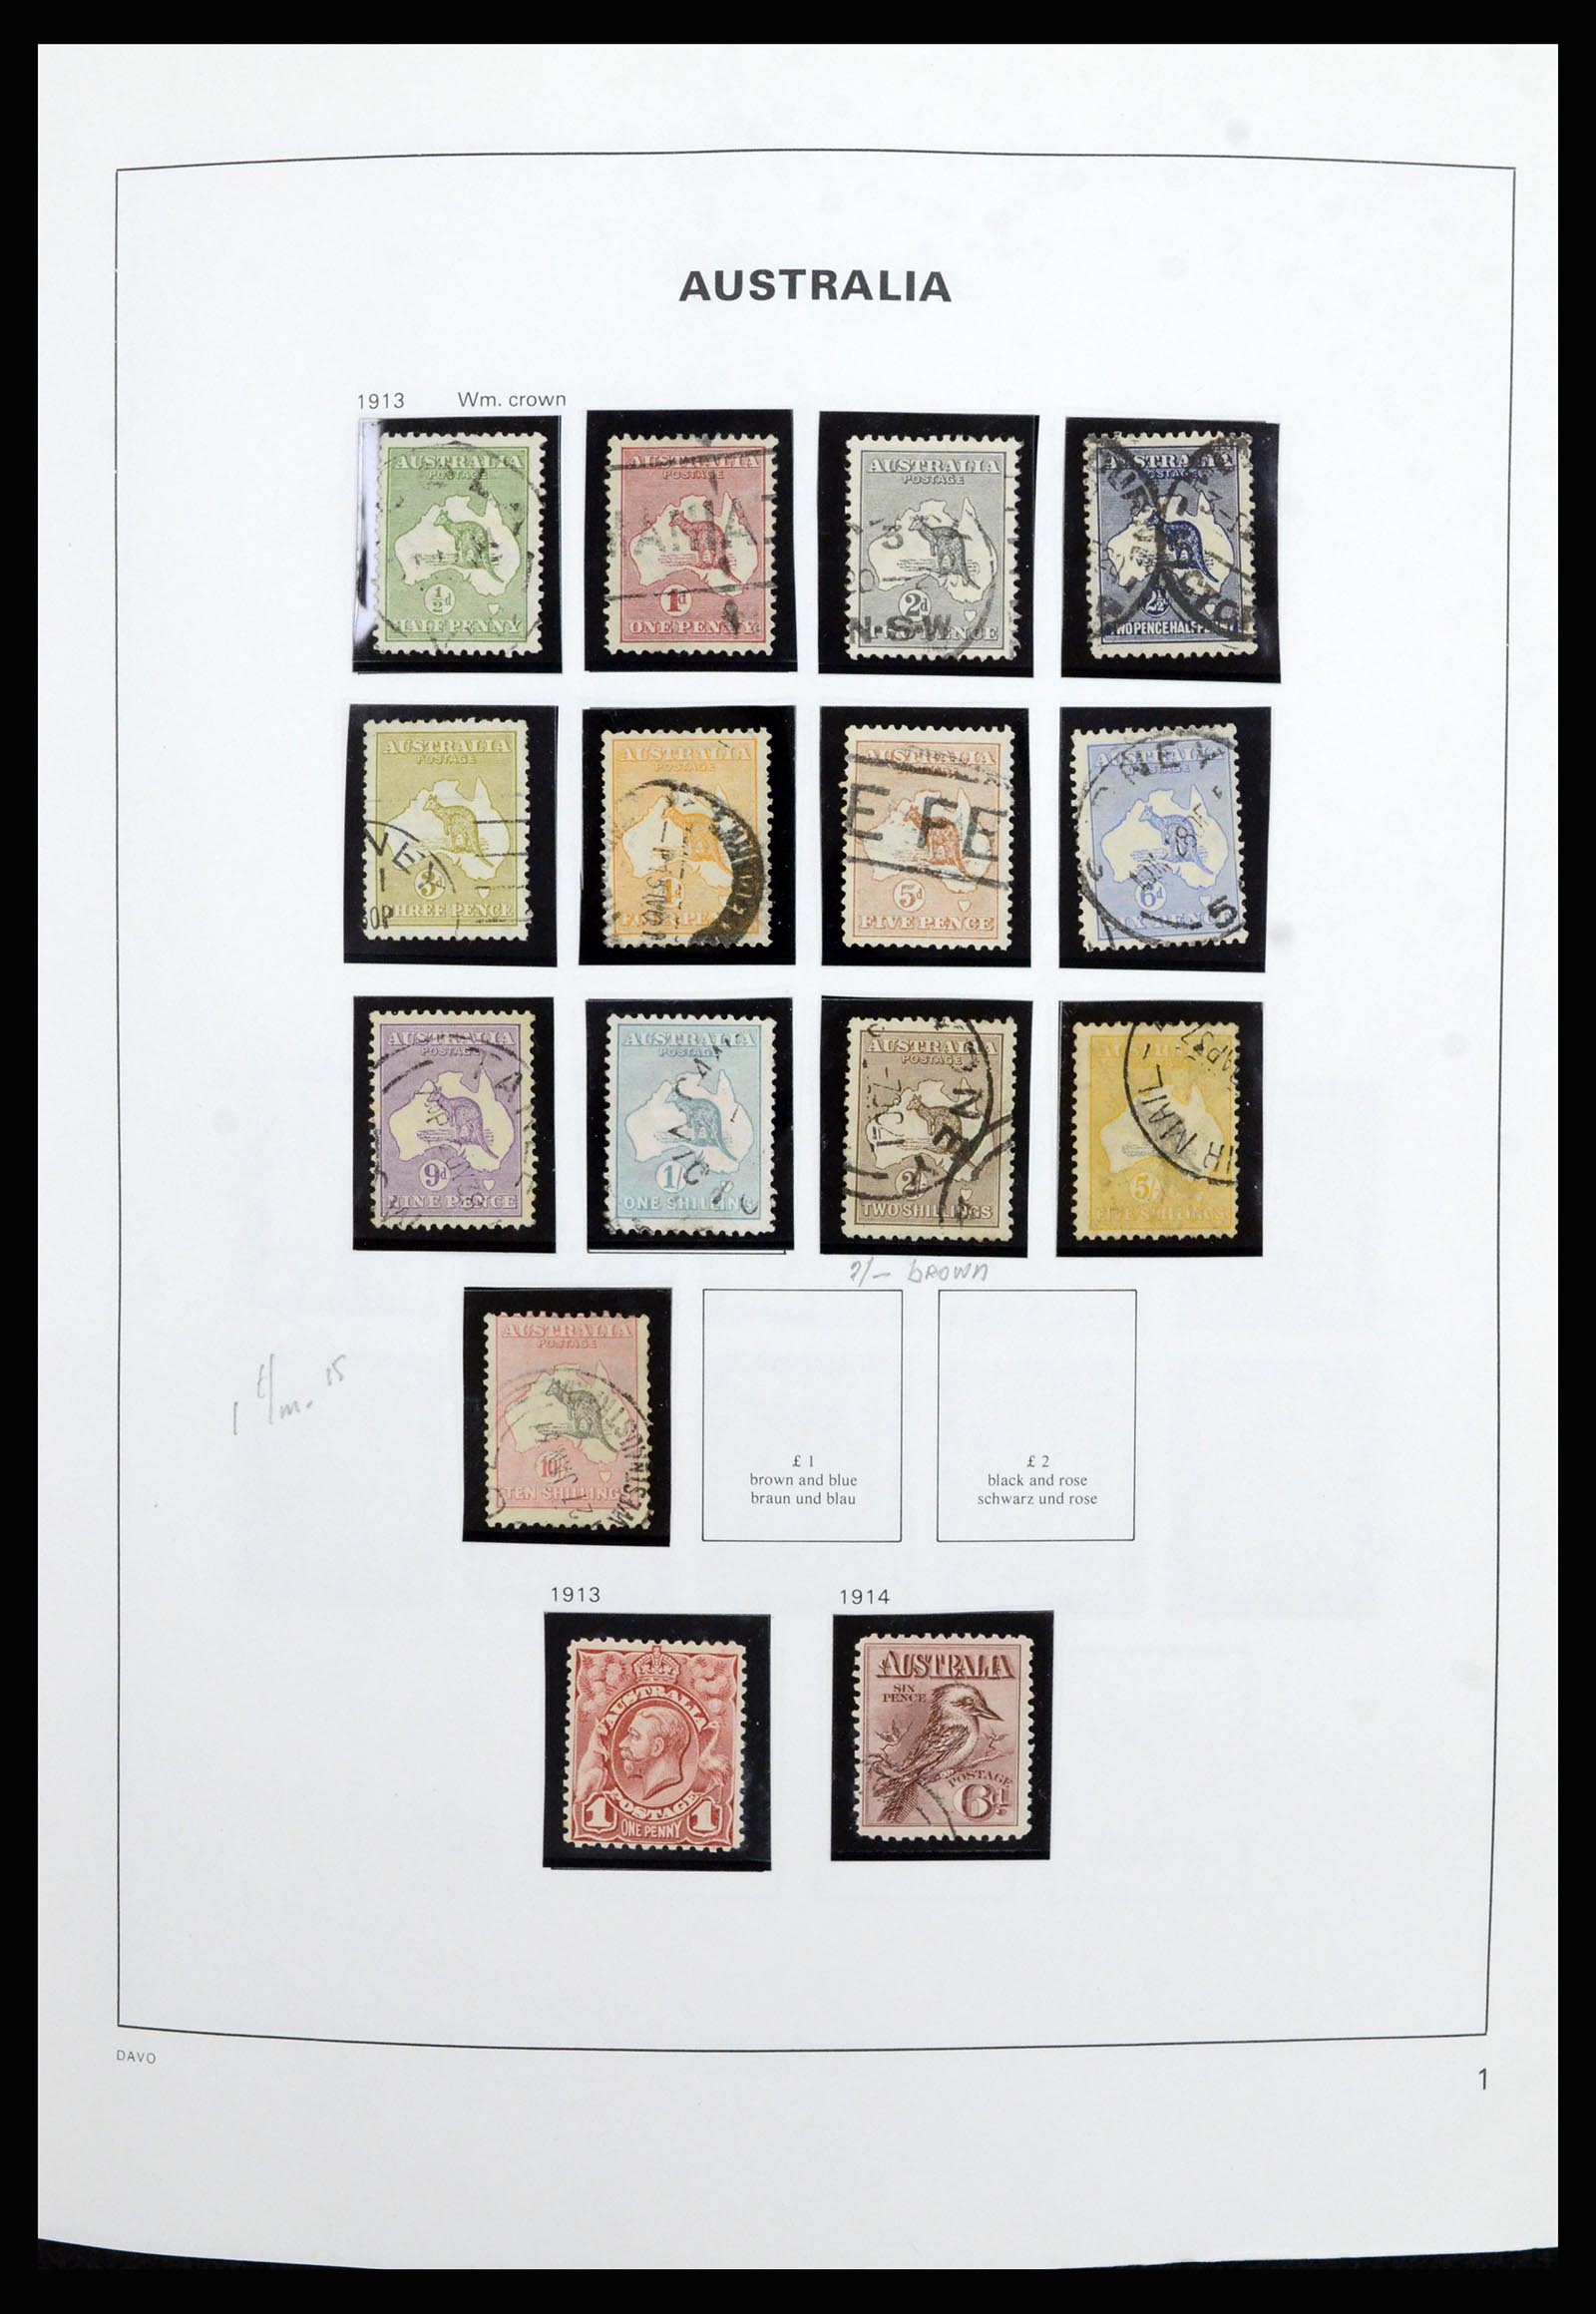 37085 001 - Stamp collection 37085 Australia 1913-2018!